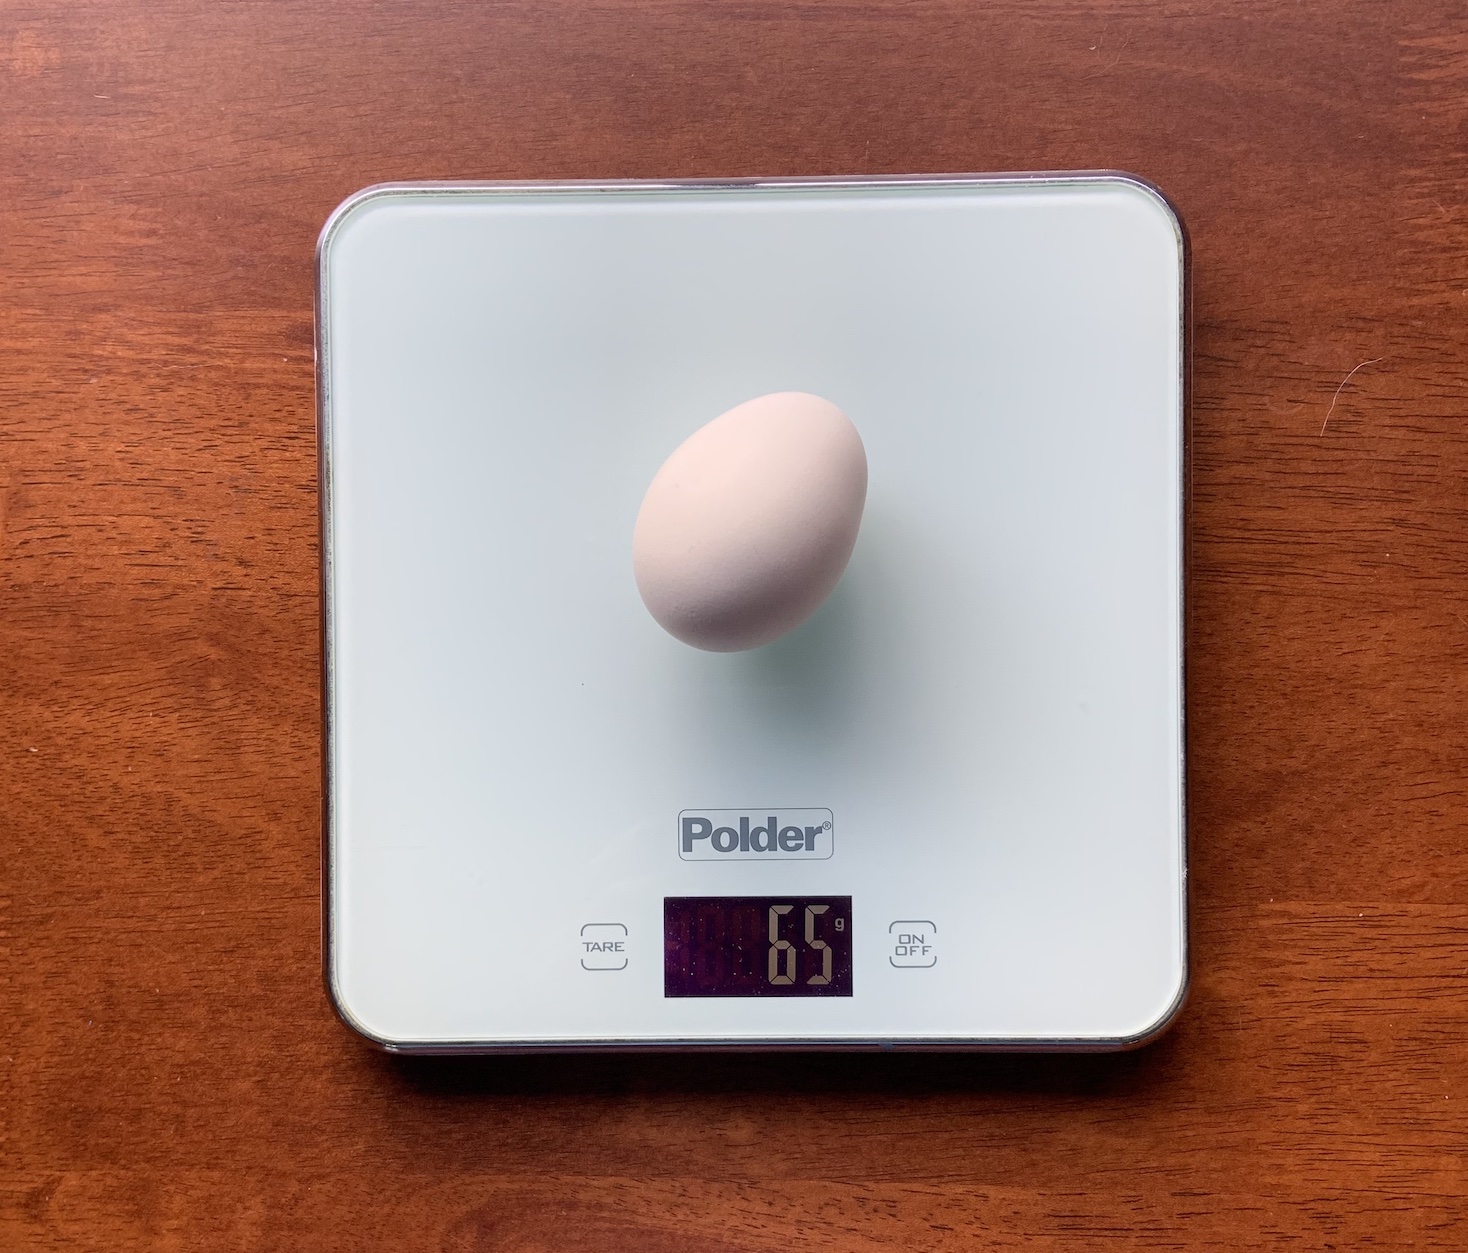 Chicken egg on kitchen scale weighs 65 grams